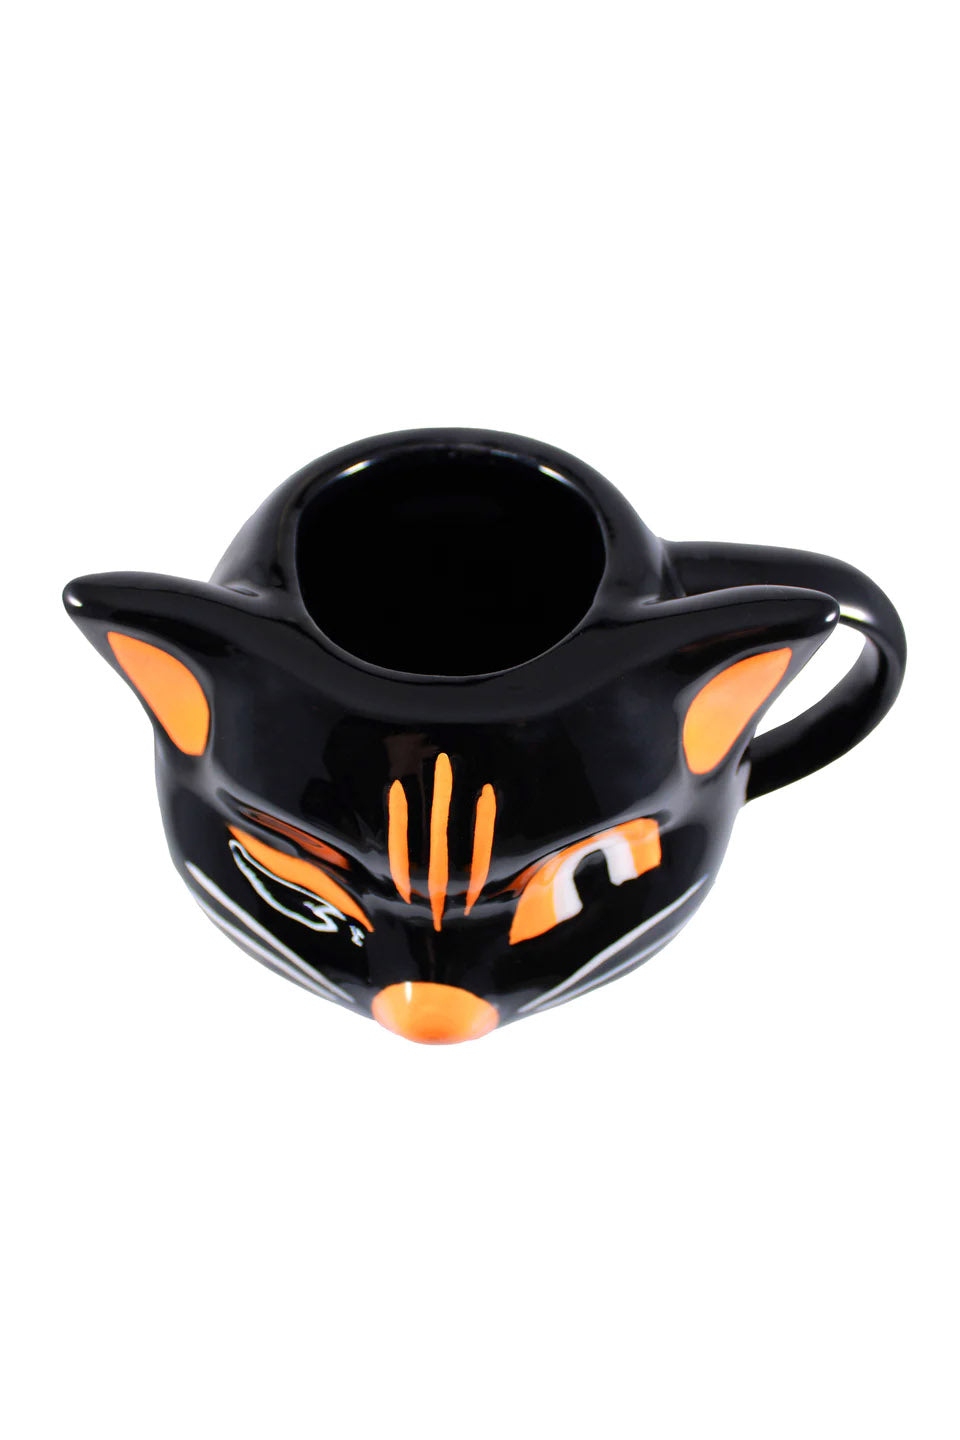 Jinx Halloween Black Cat Mug